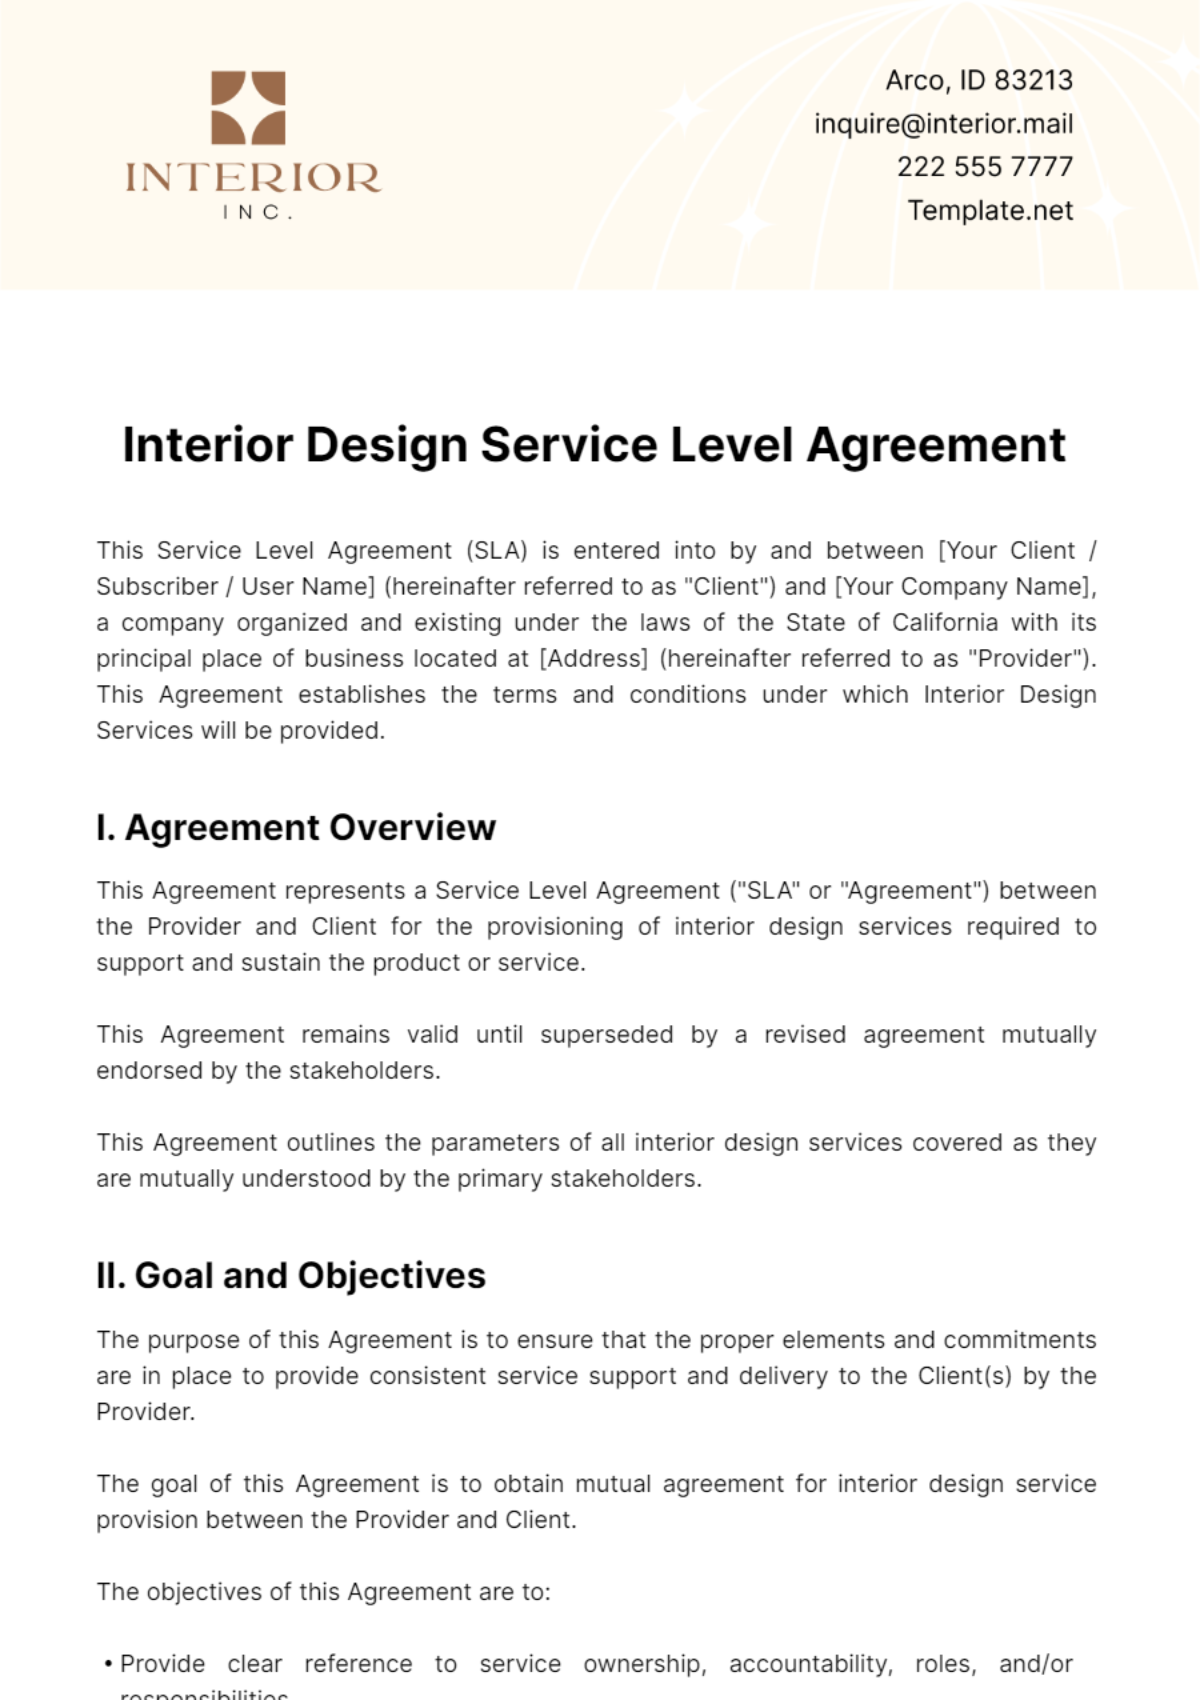 Interior Design Service Level Agreement Template